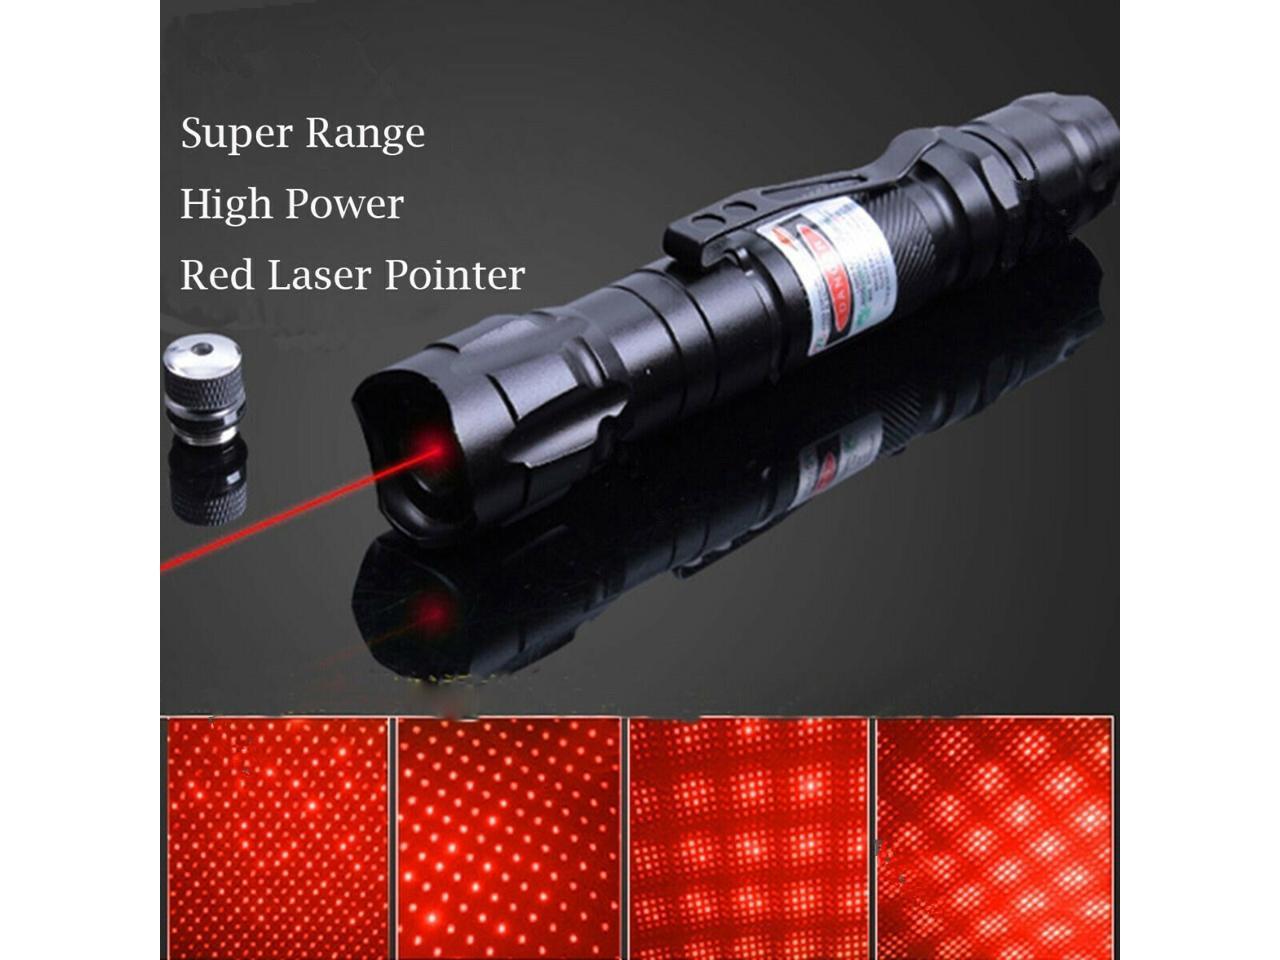 Green/Red Laser Finger Star Pointer Pen USB Port Charging 650nm Visible Lazer A 